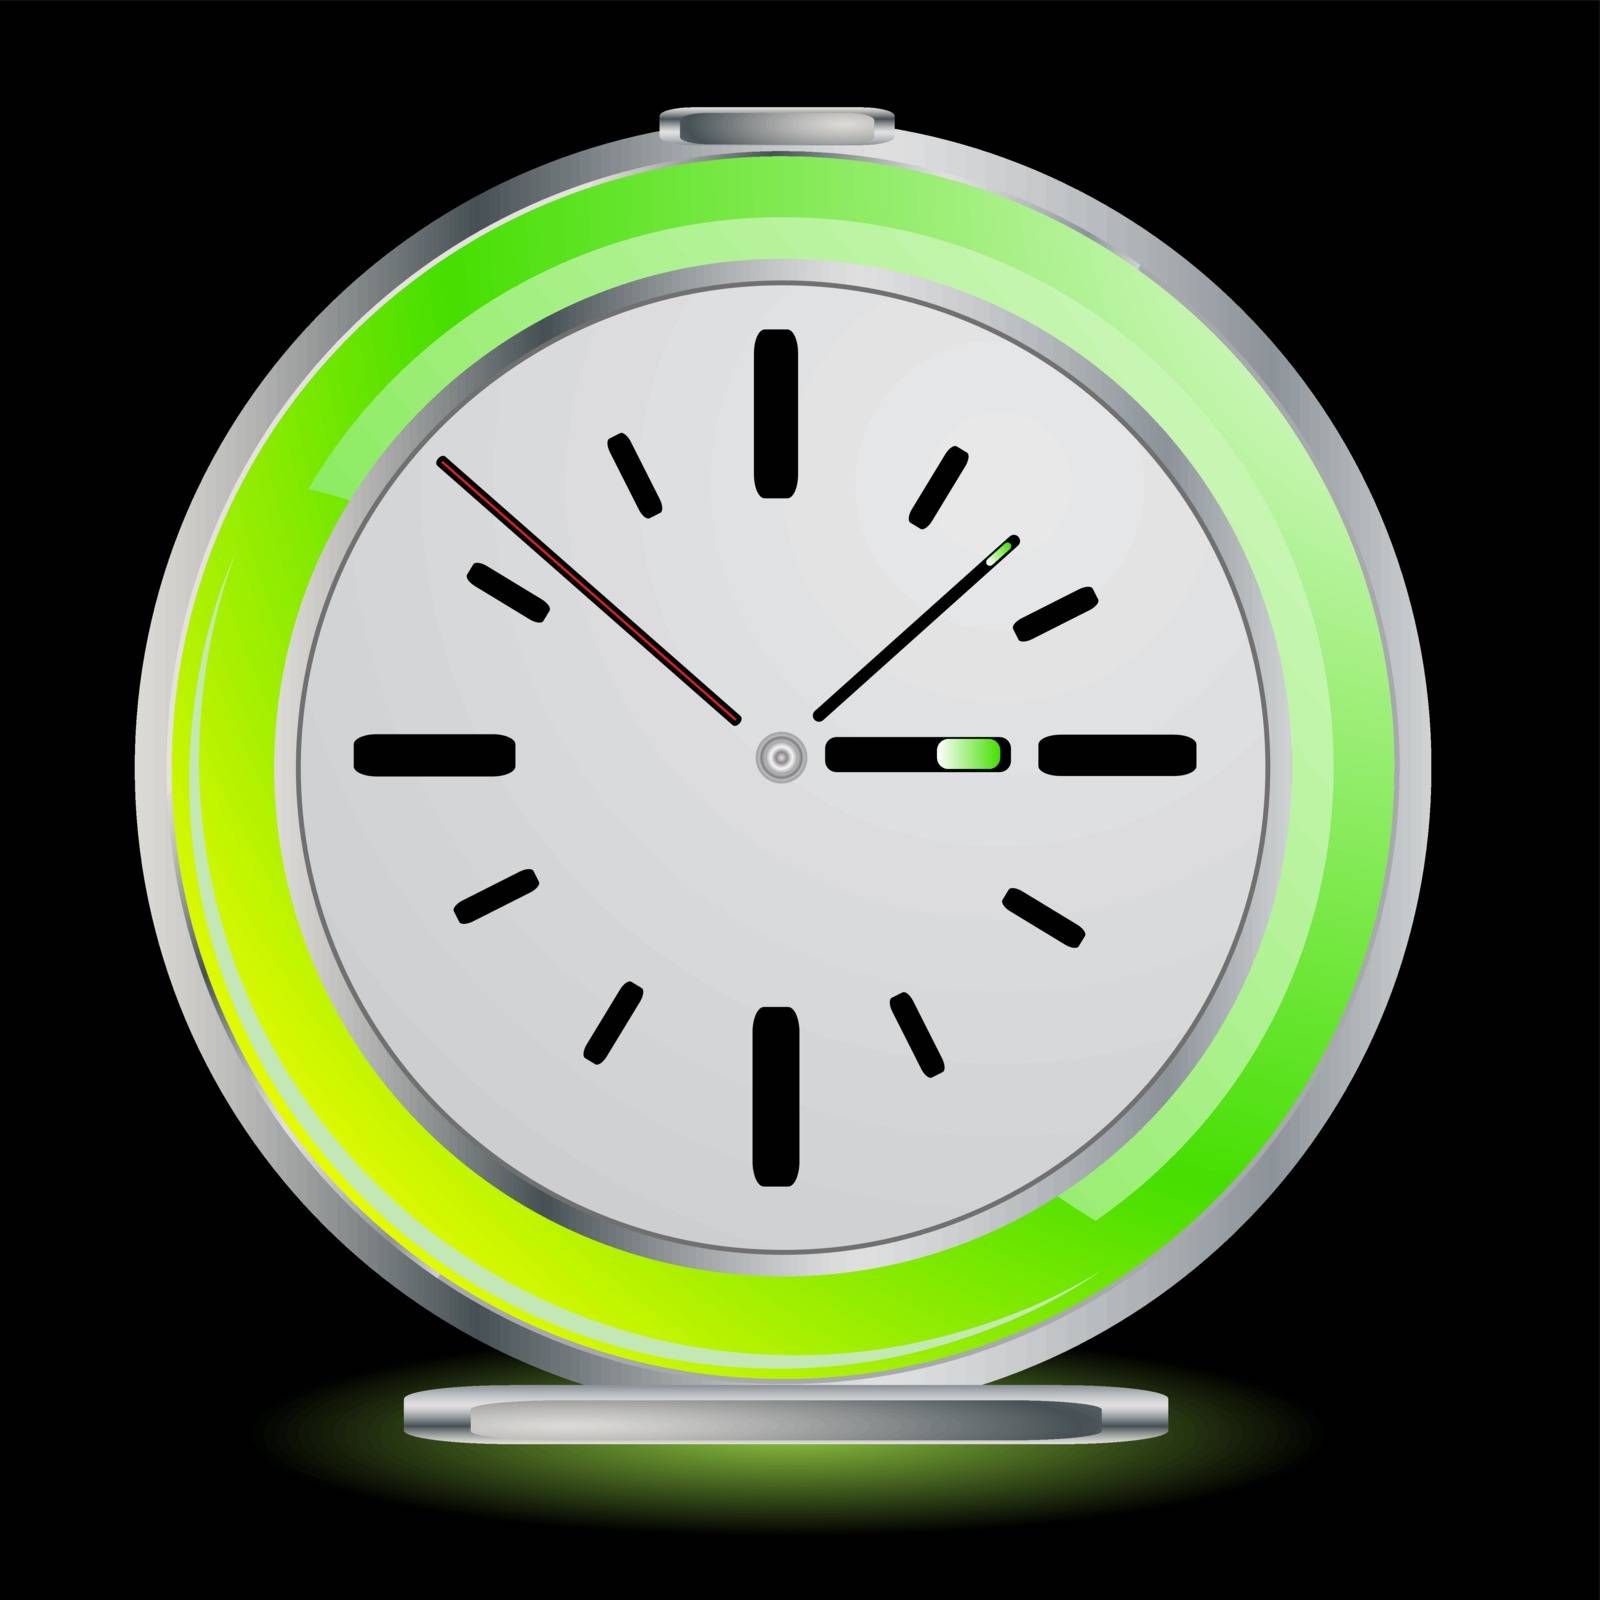 Alarm Clock by Lizard